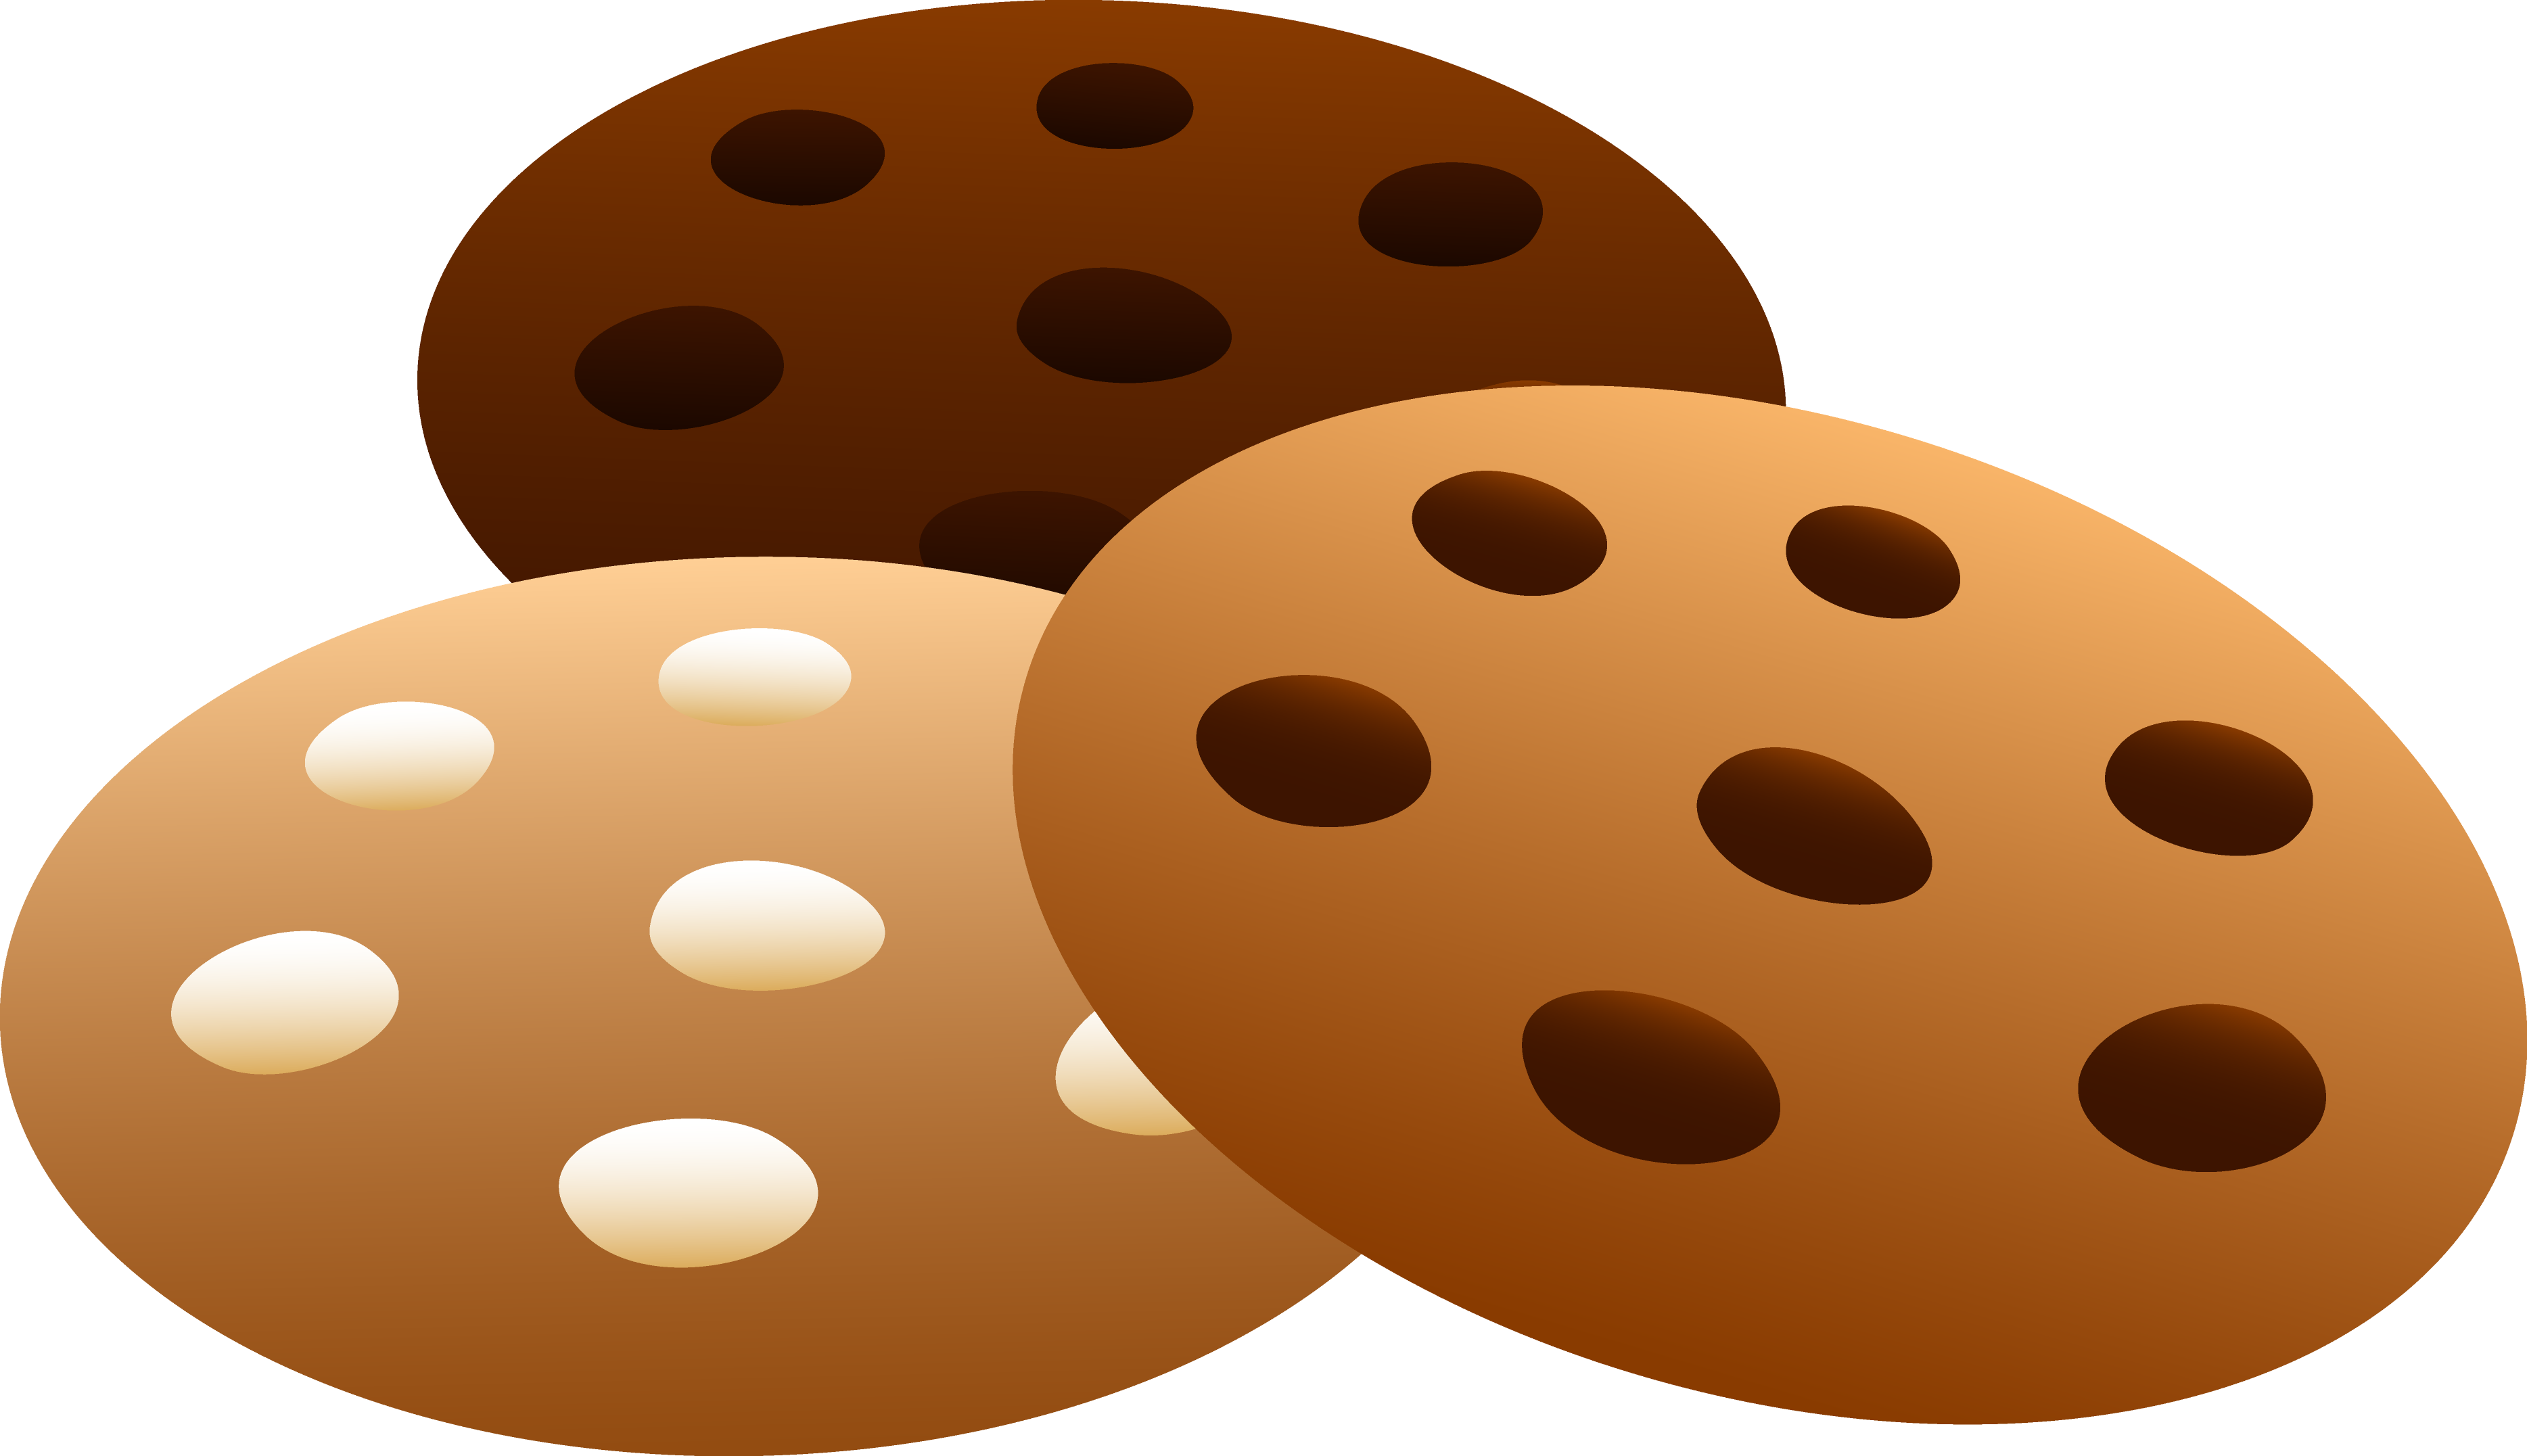 Three Flavors Of Cookies Free Clip Art u0026middot; Chocolate Chip ...